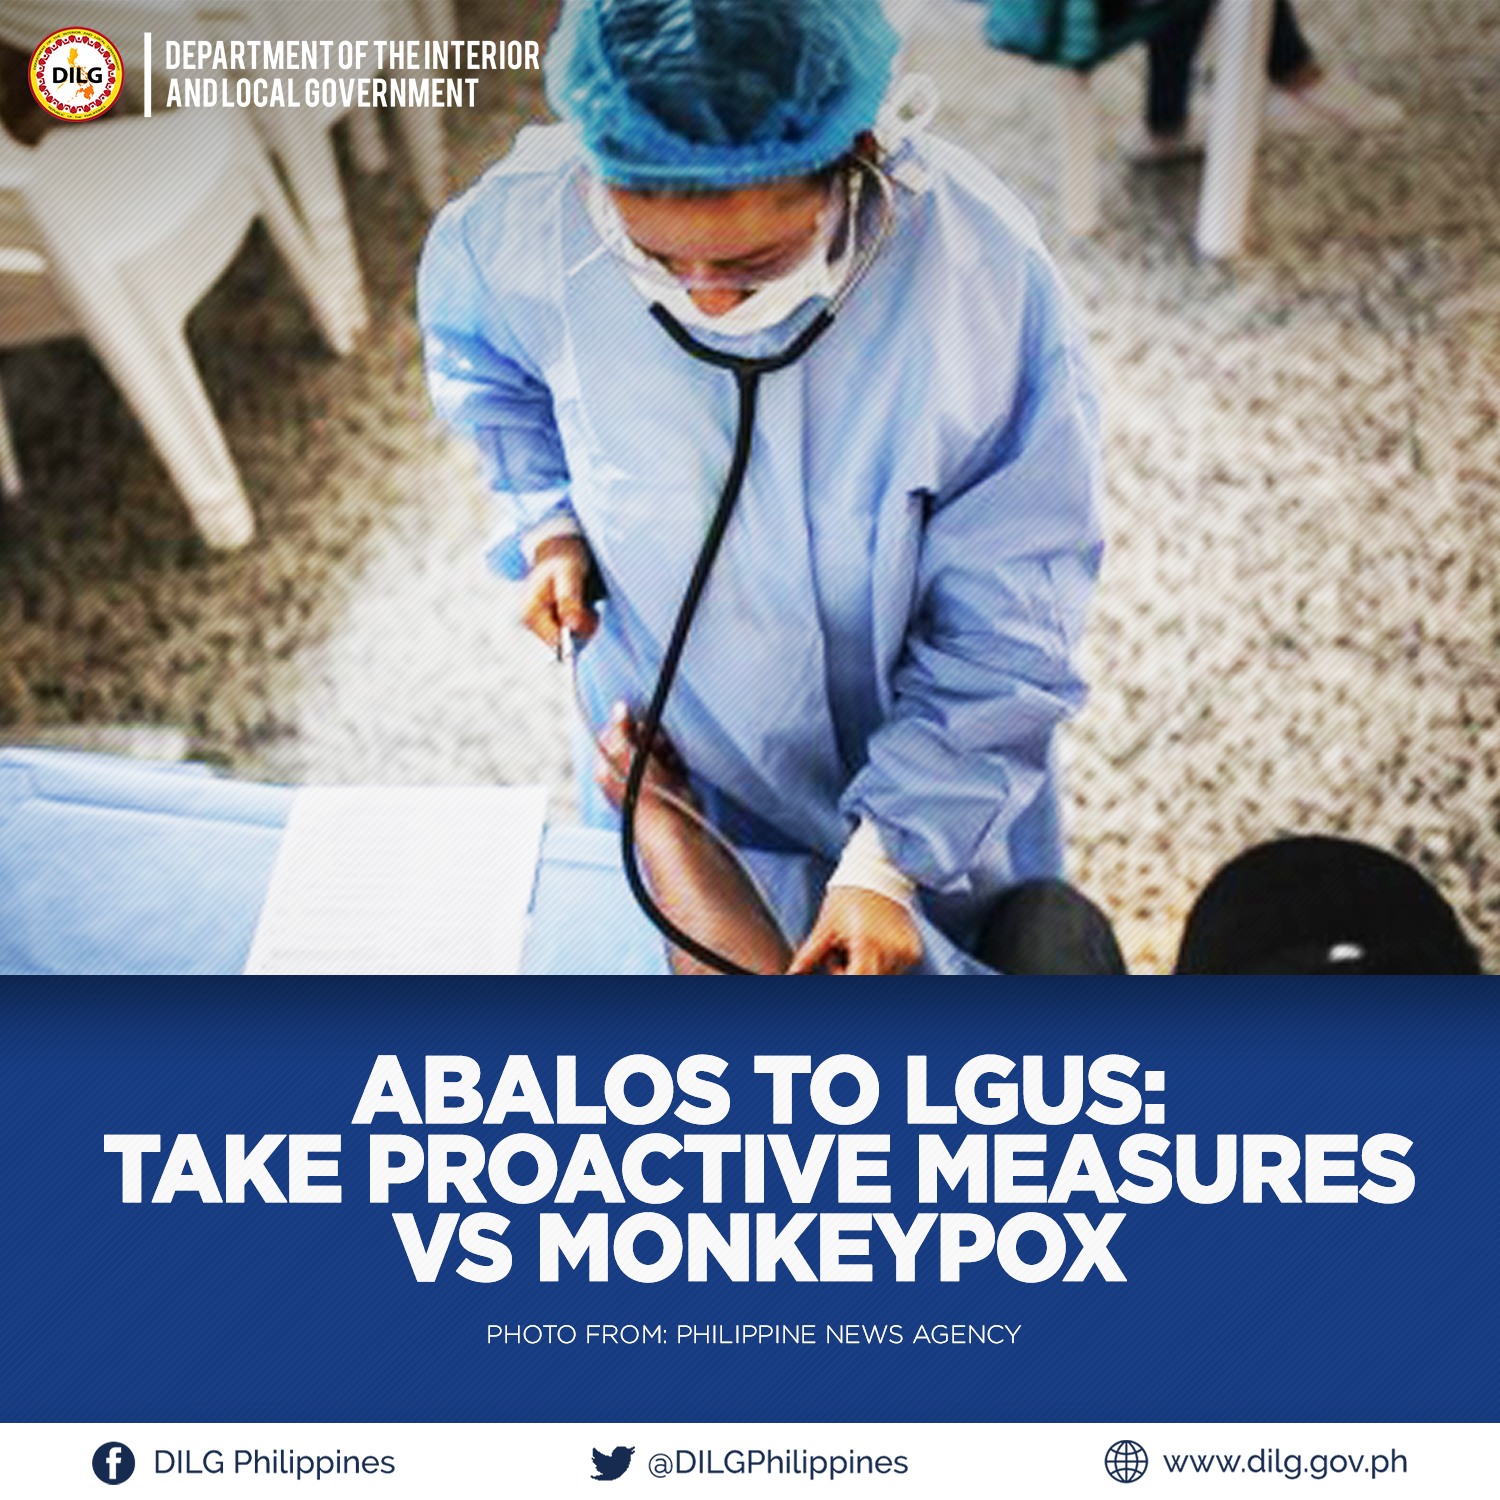 Abalos to LGUs: Take proactive measures vs monkeypox